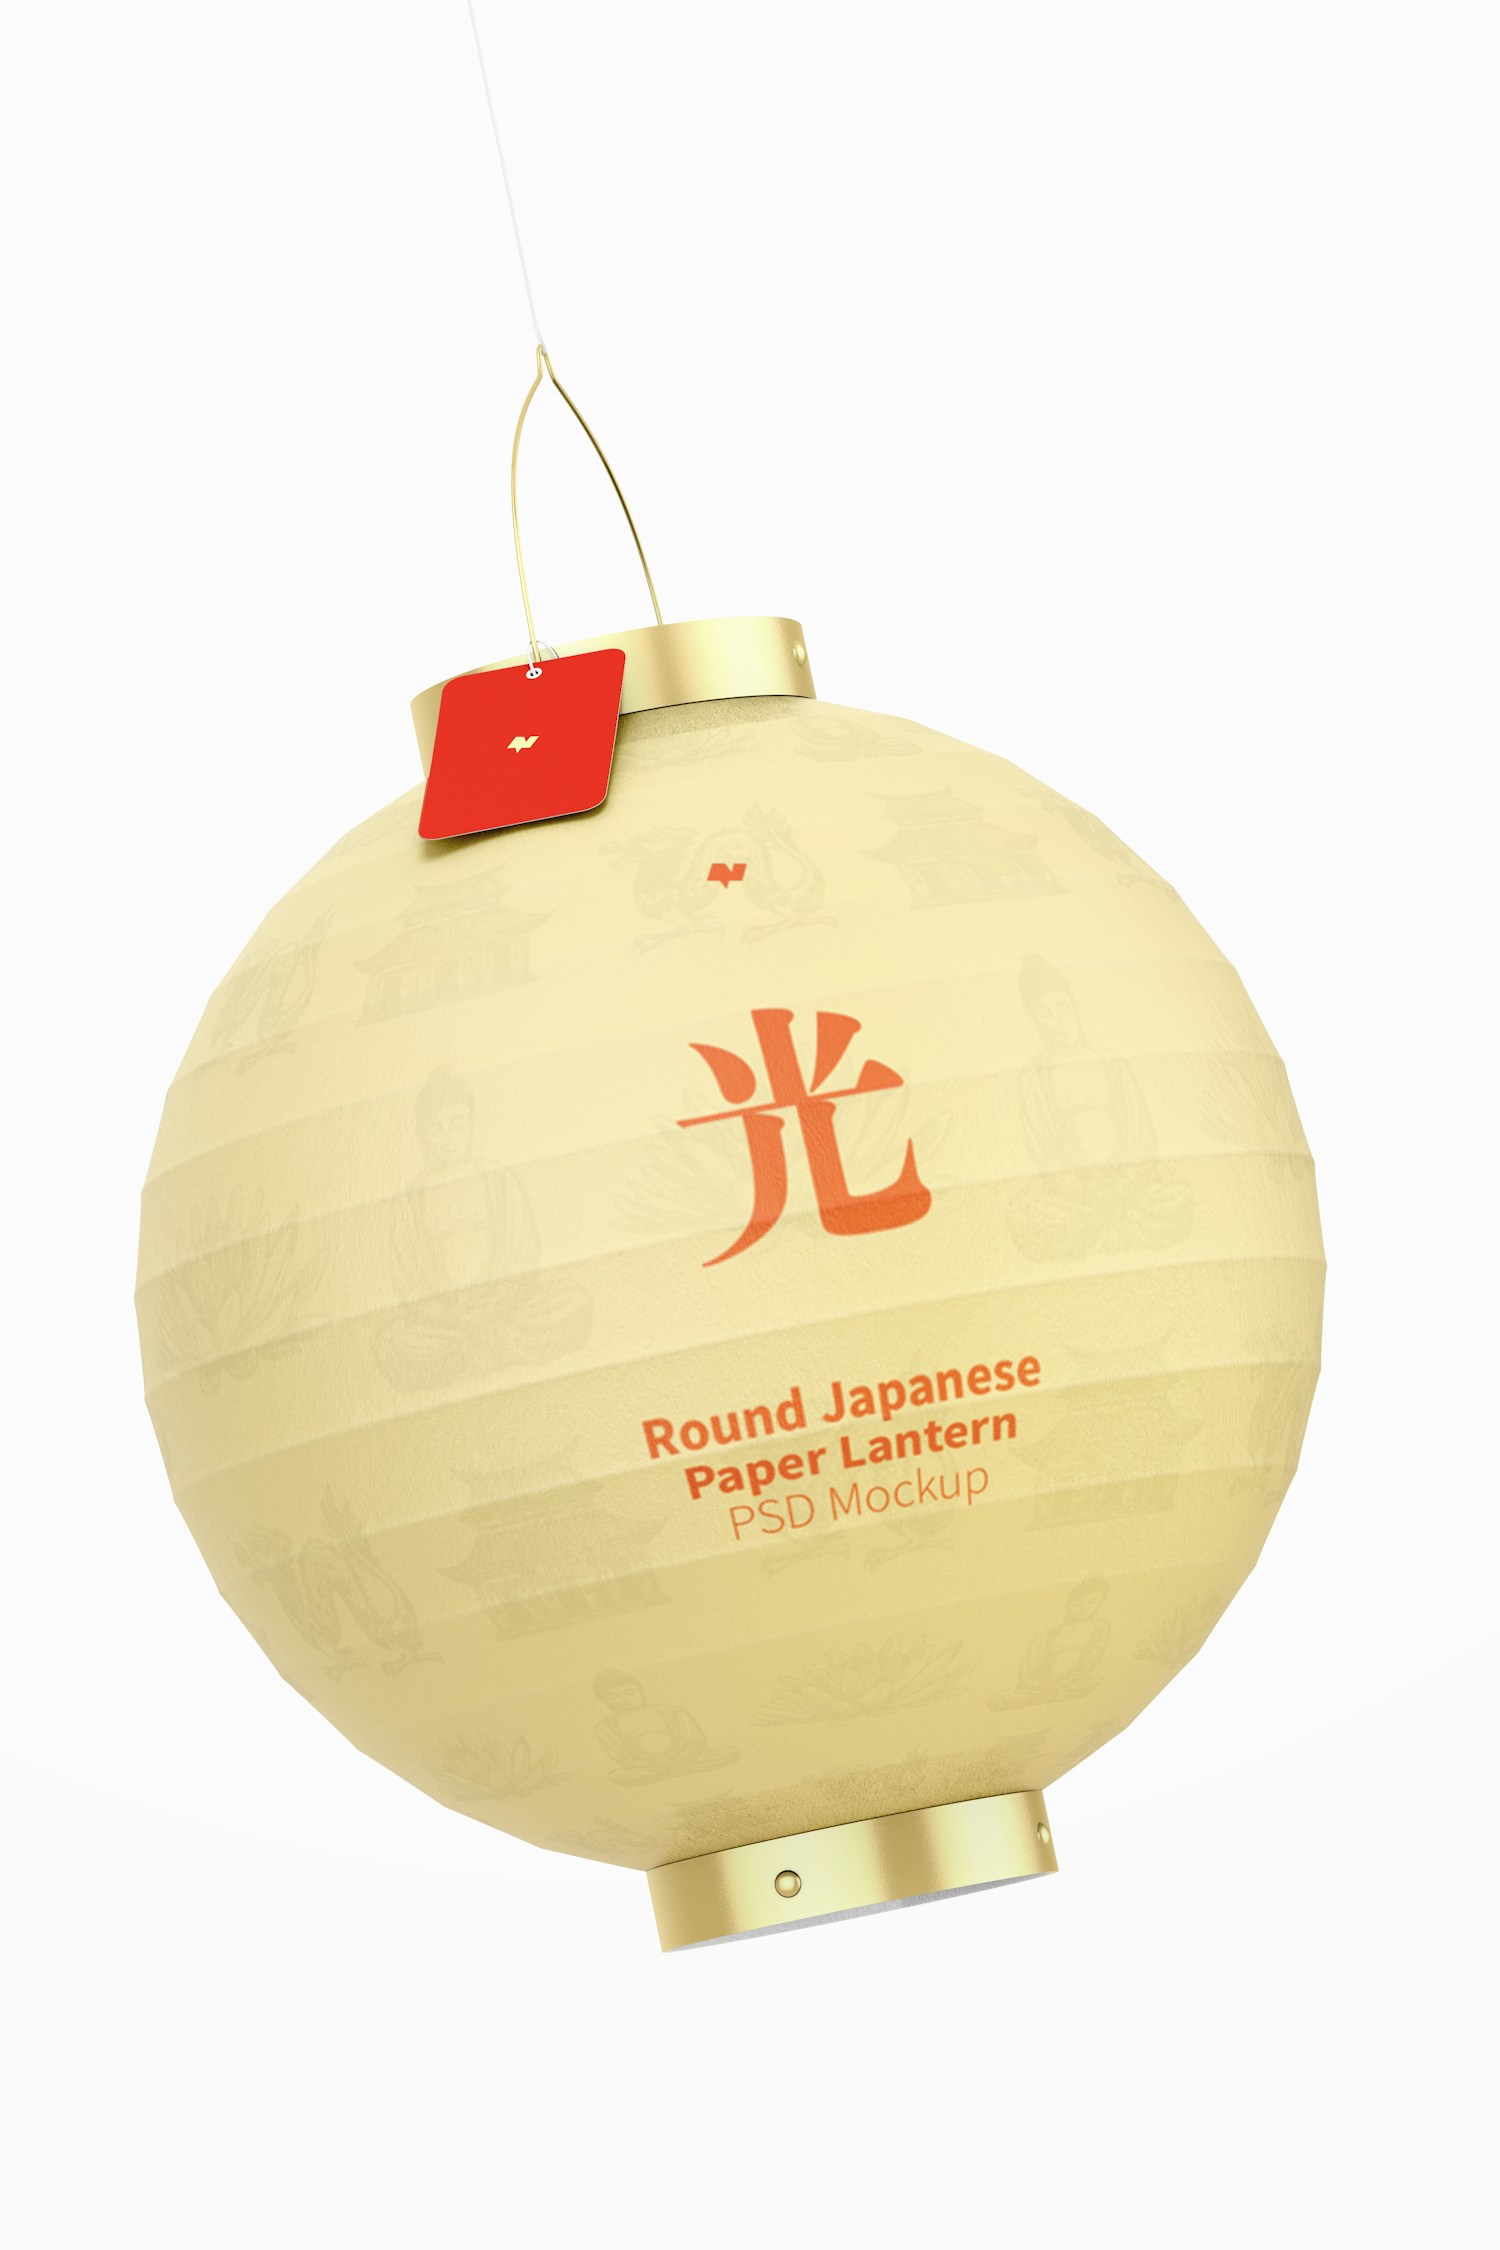 Round Japanese Paper Lantern Mockup, Floating